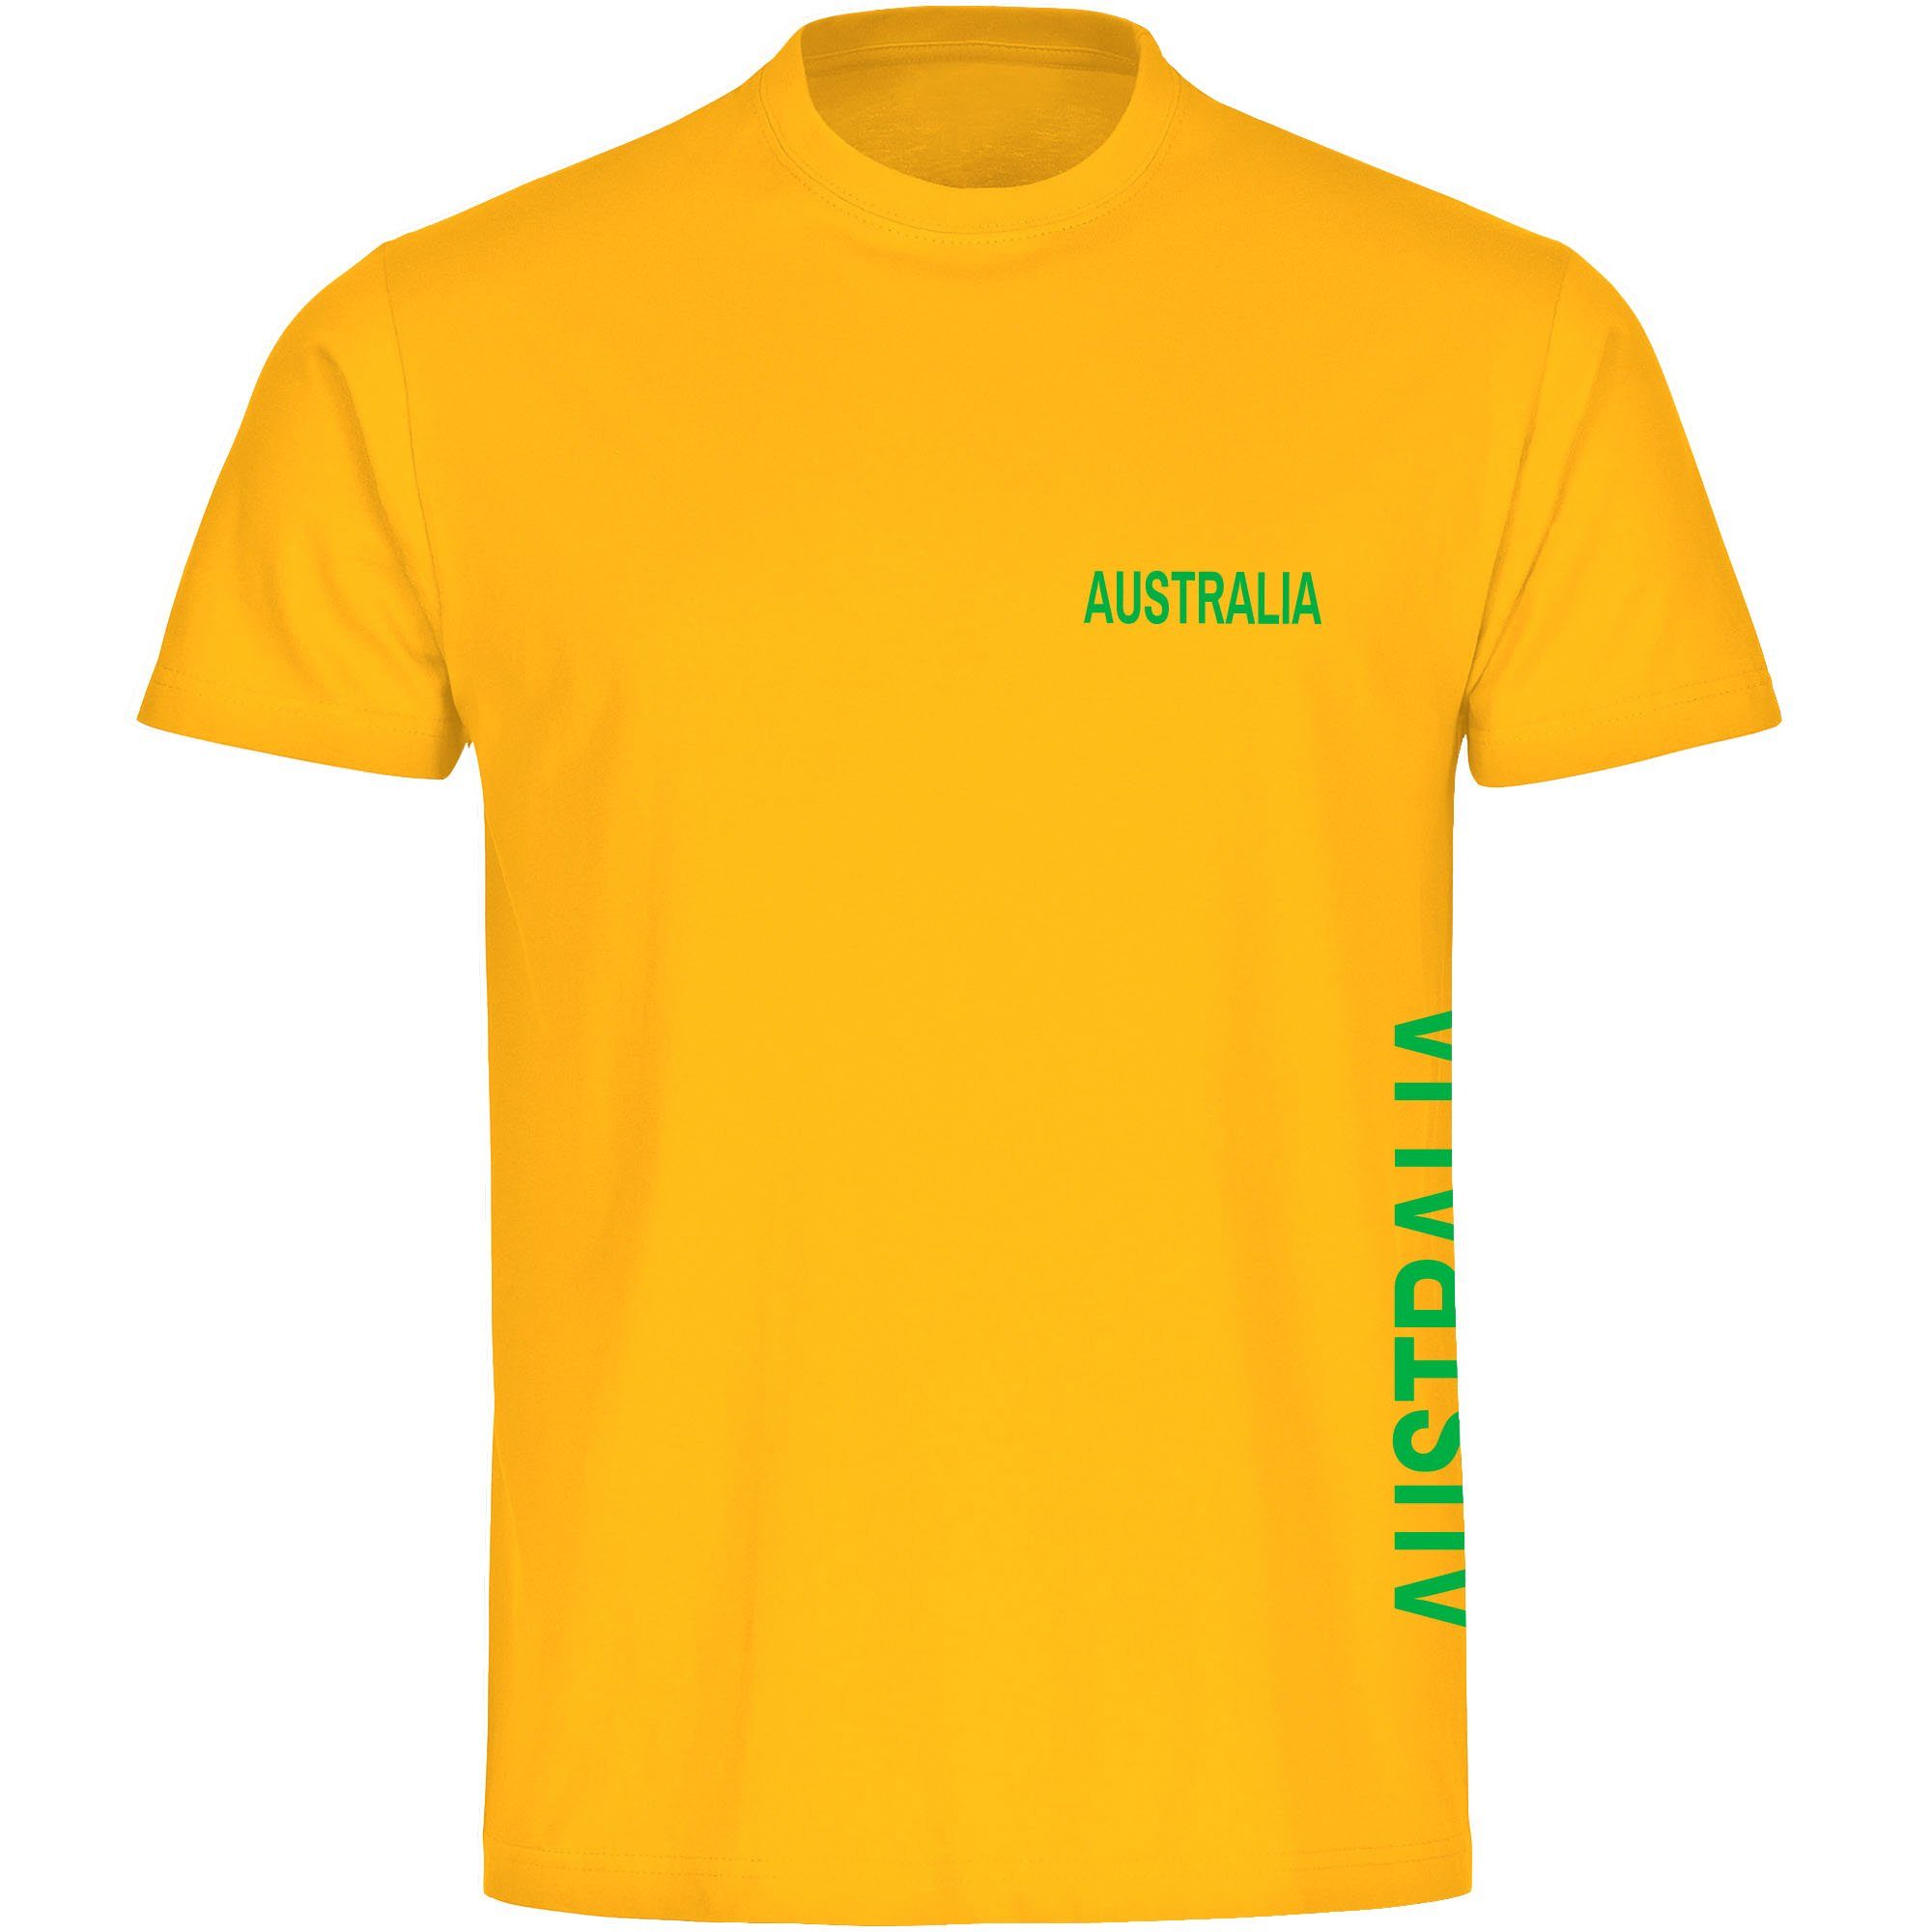 multifanshop T-Shirt Kinder Australia - Brust & Seite - Boy Girl